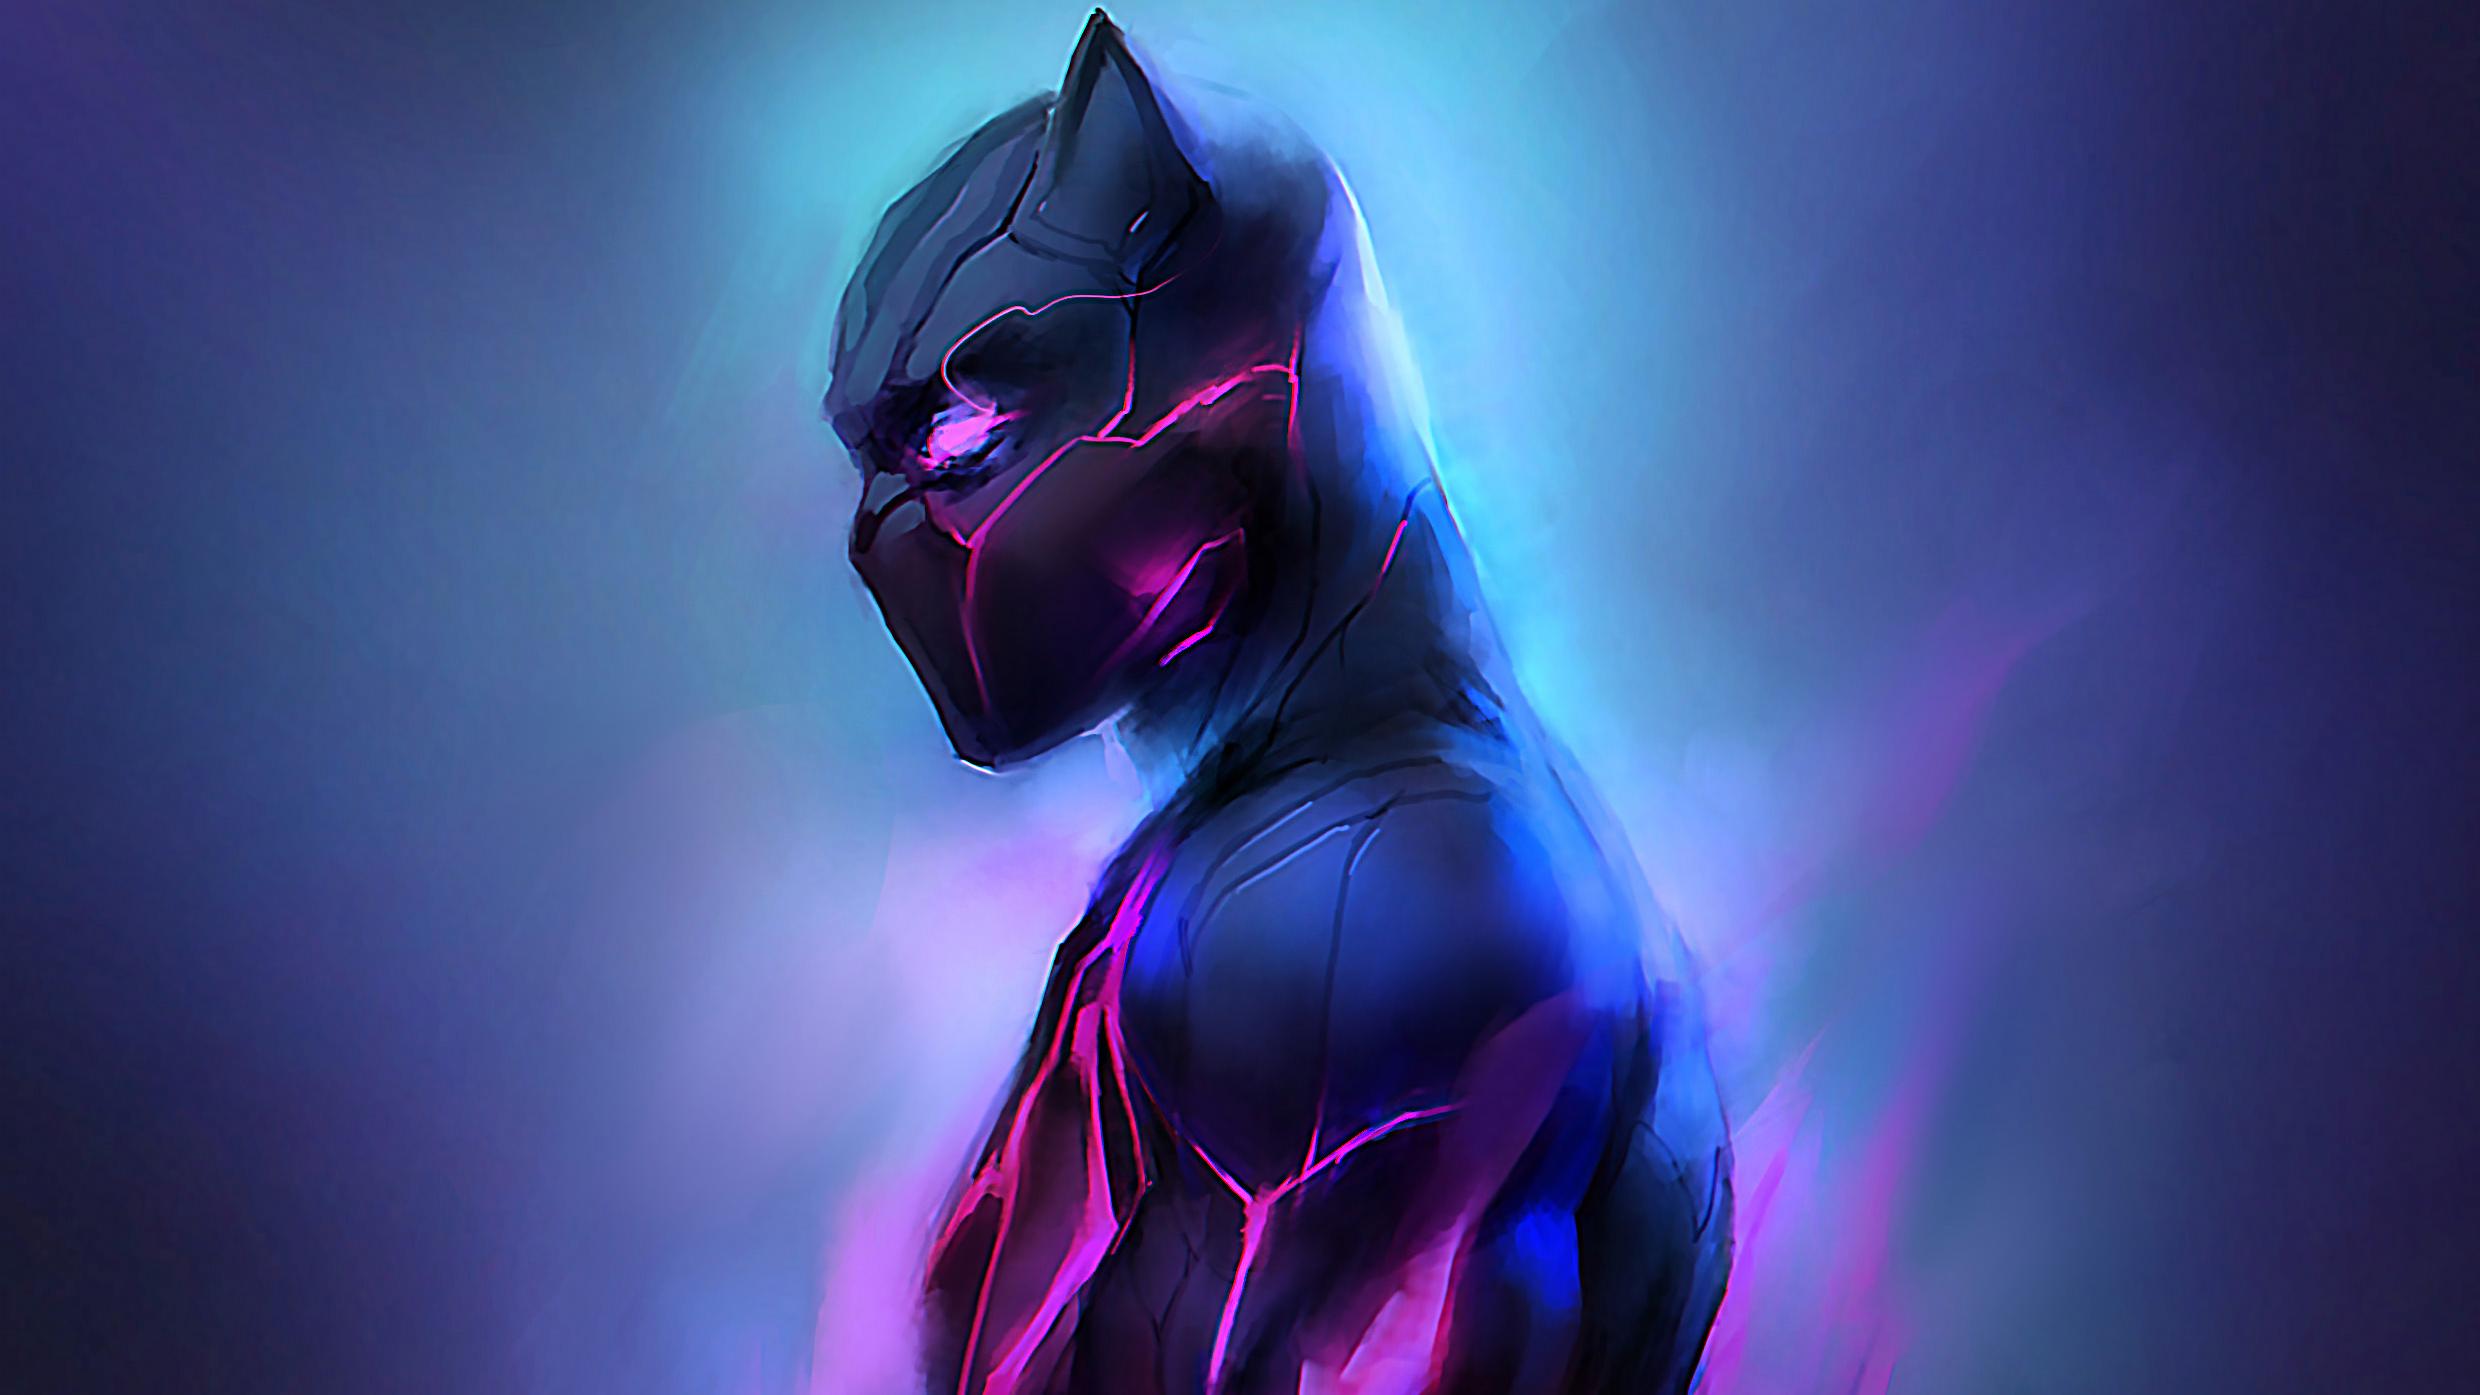 #black panther, #superheroes, #artist, #artwork